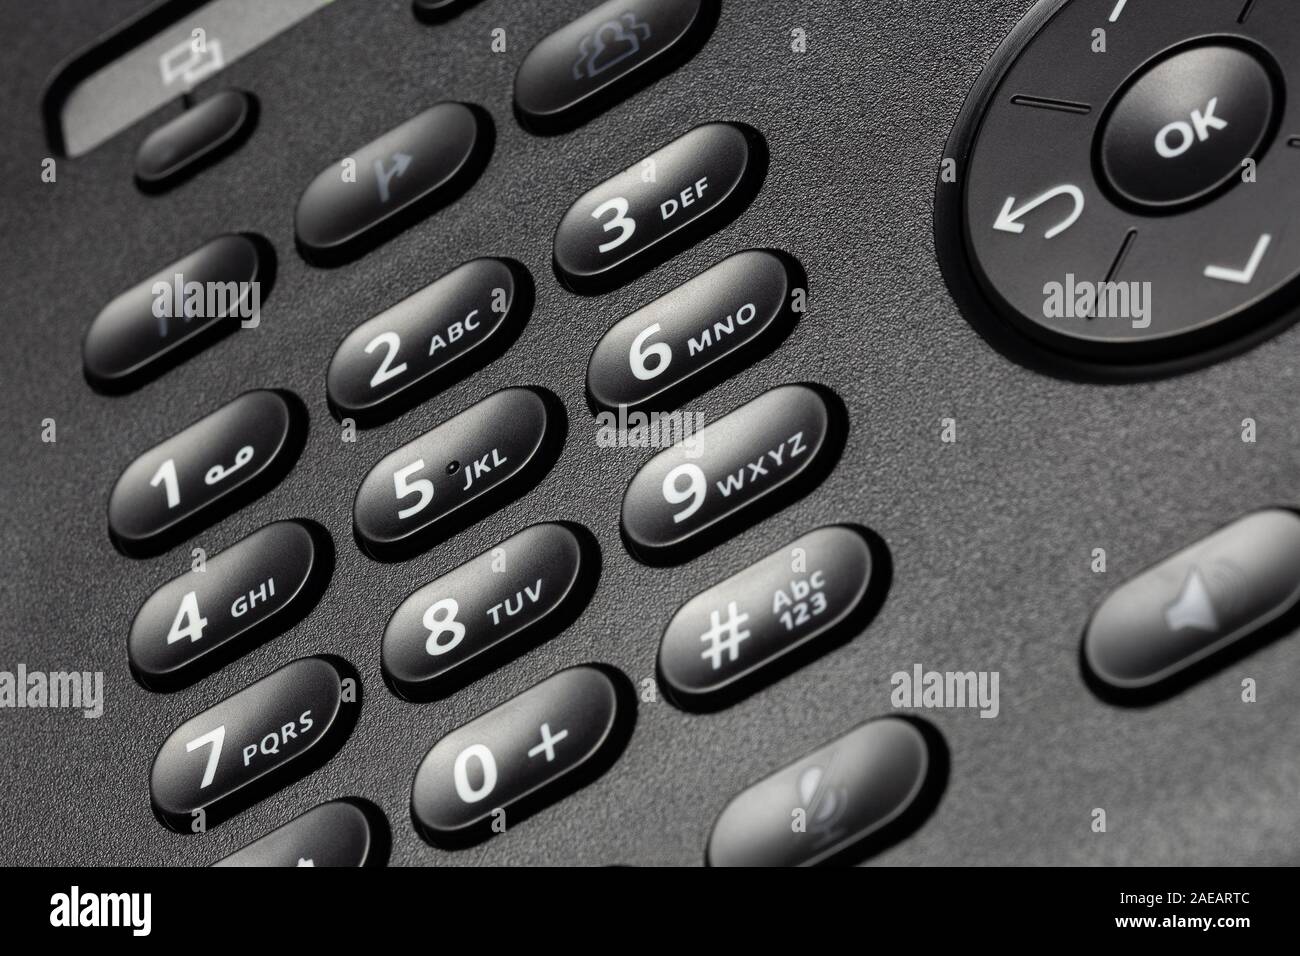 Keypad, with buttons and navipad on a landline telephone, closeup Stock Photo